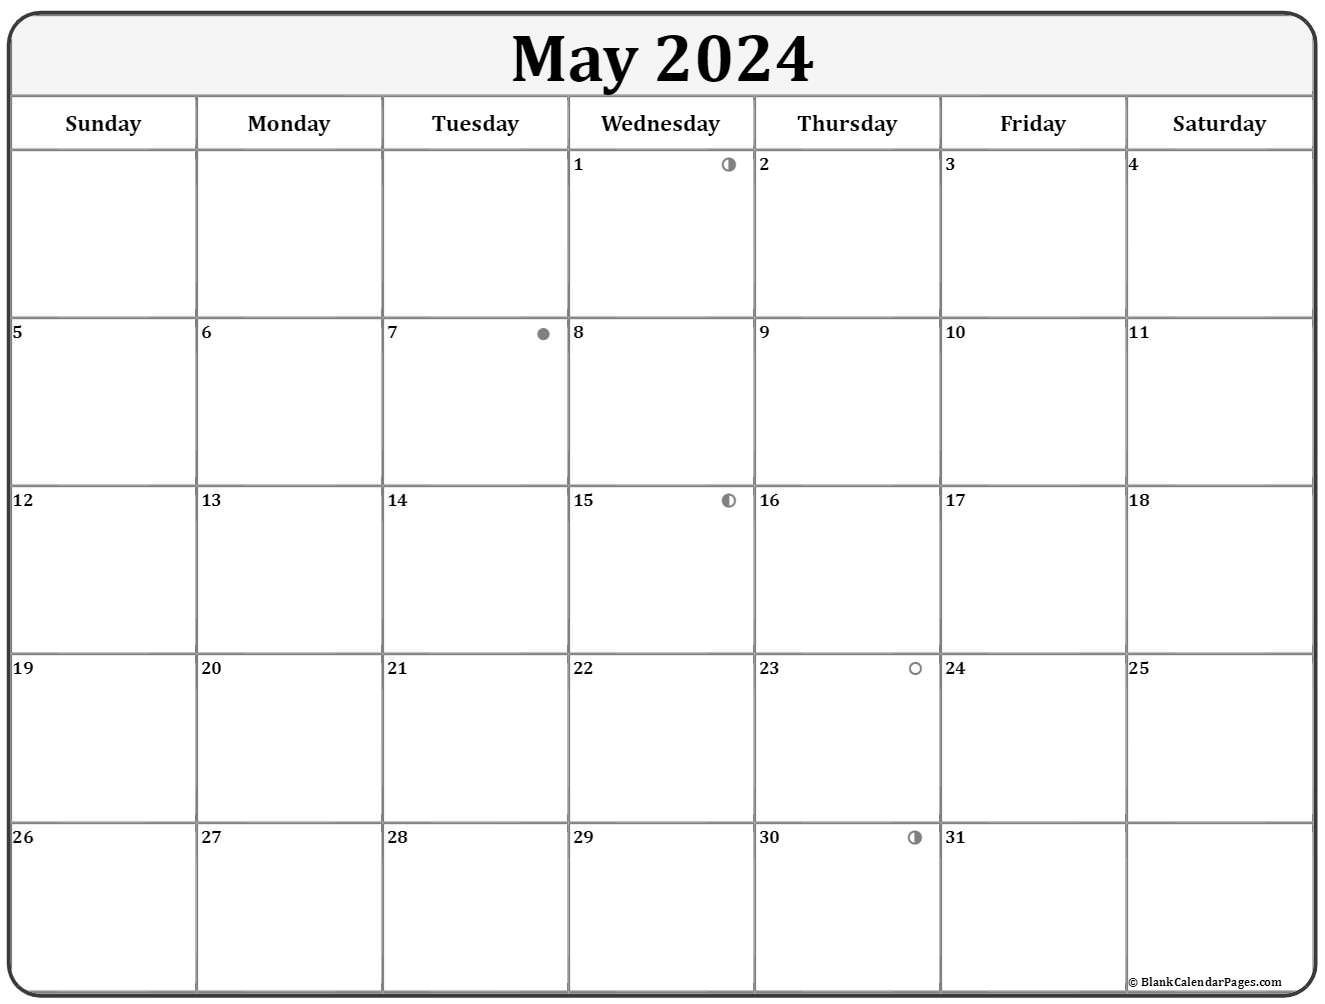 Moon Calendar May 2022 May 2022 Lunar Calendar | Moon Phase Calendar